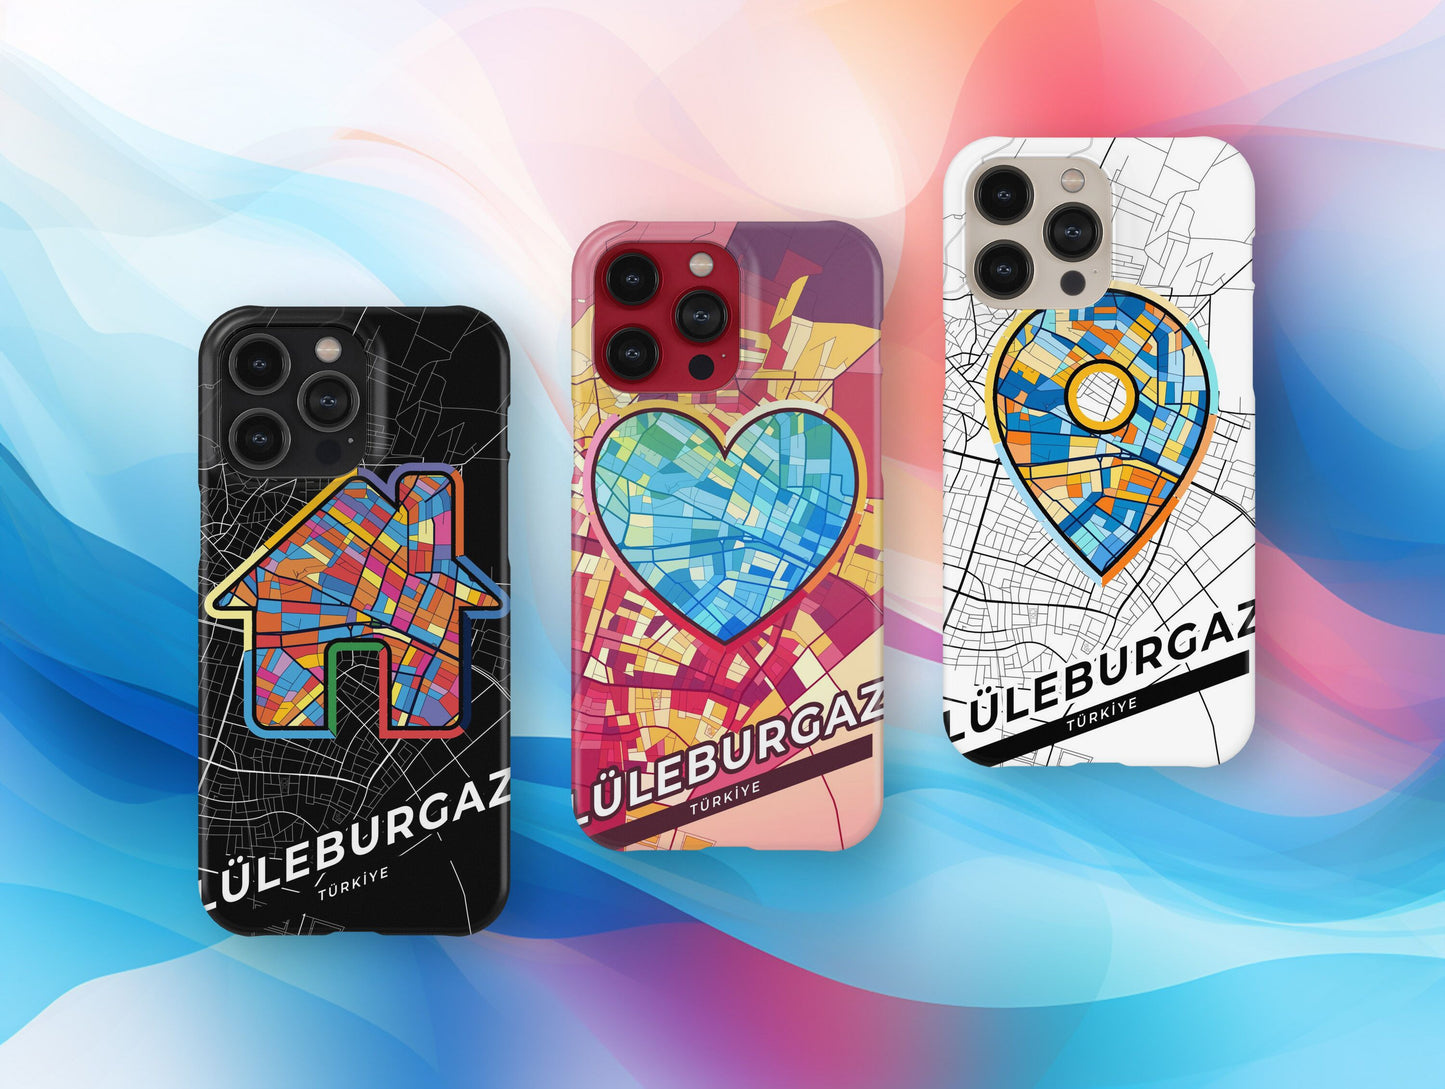 Lüleburgaz Turkey slim phone case with colorful icon. Birthday, wedding or housewarming gift. Couple match cases.